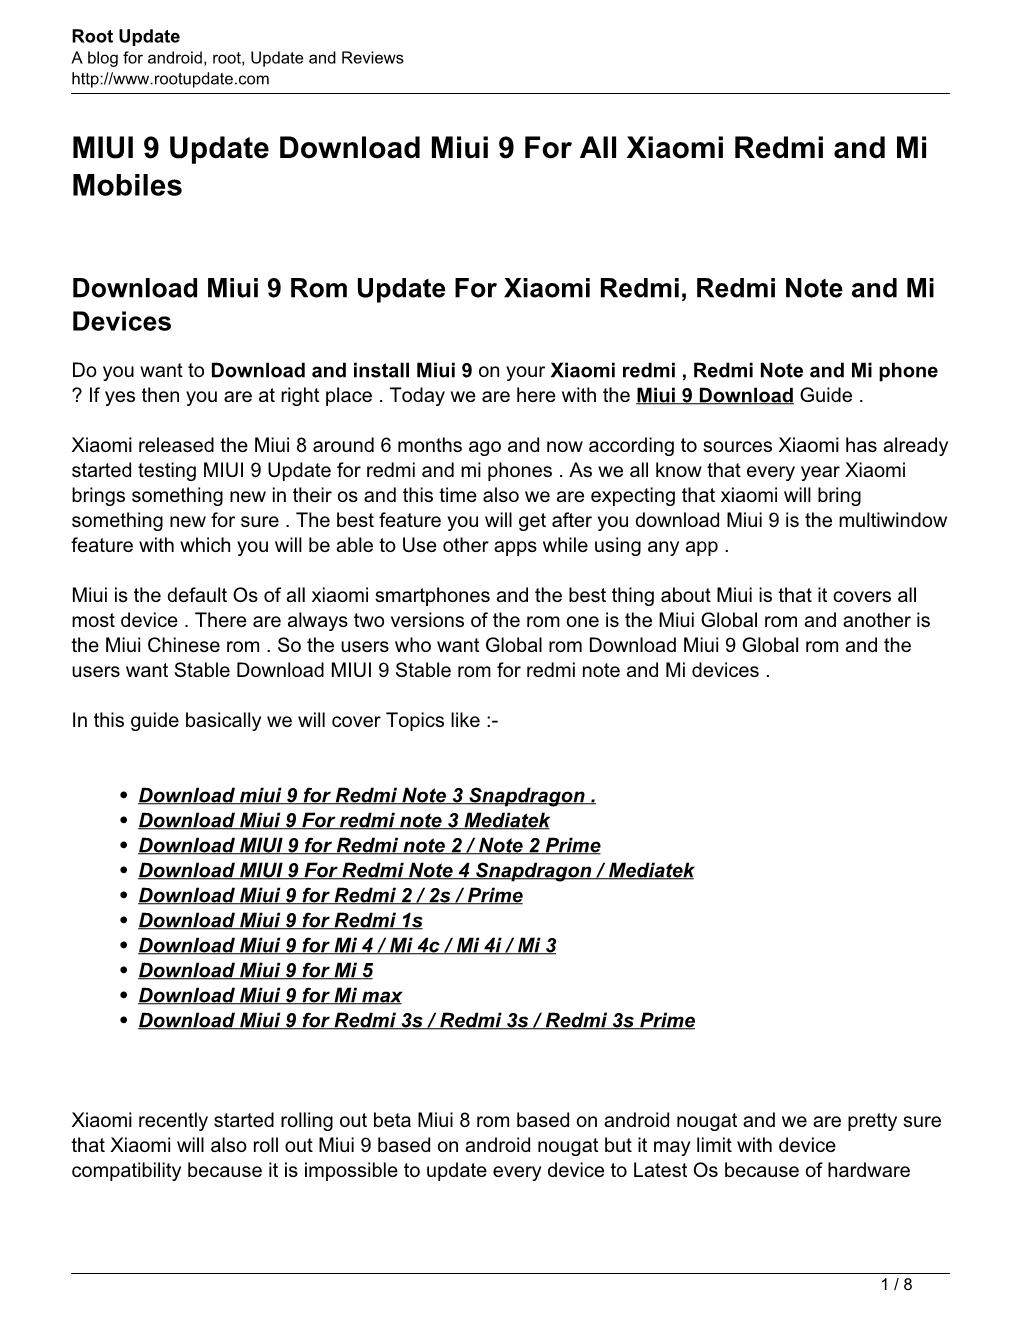 MIUI 9 Update Download Miui 9 for All Xiaomi Redmi and Mi Mobiles